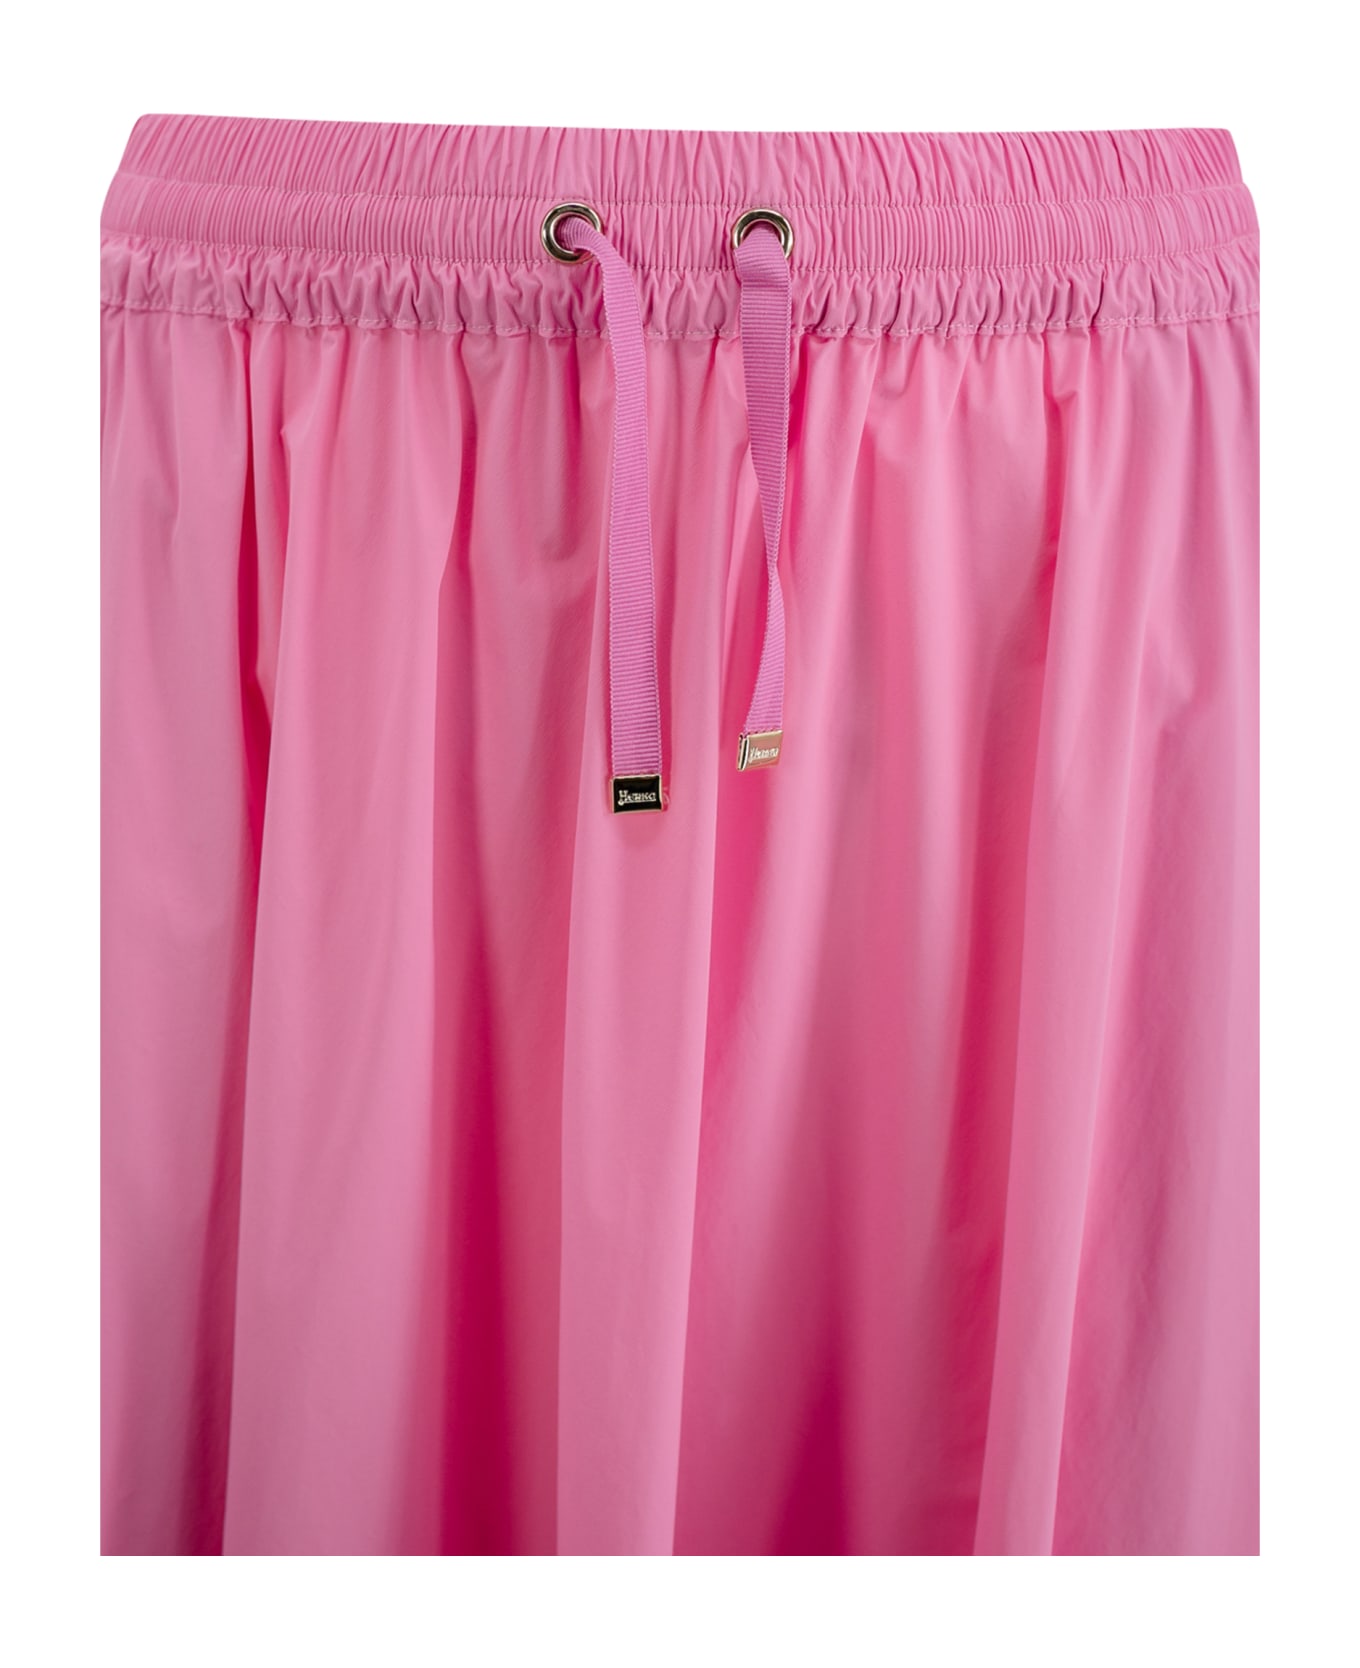 Herno Long Skirt - Pink スカート